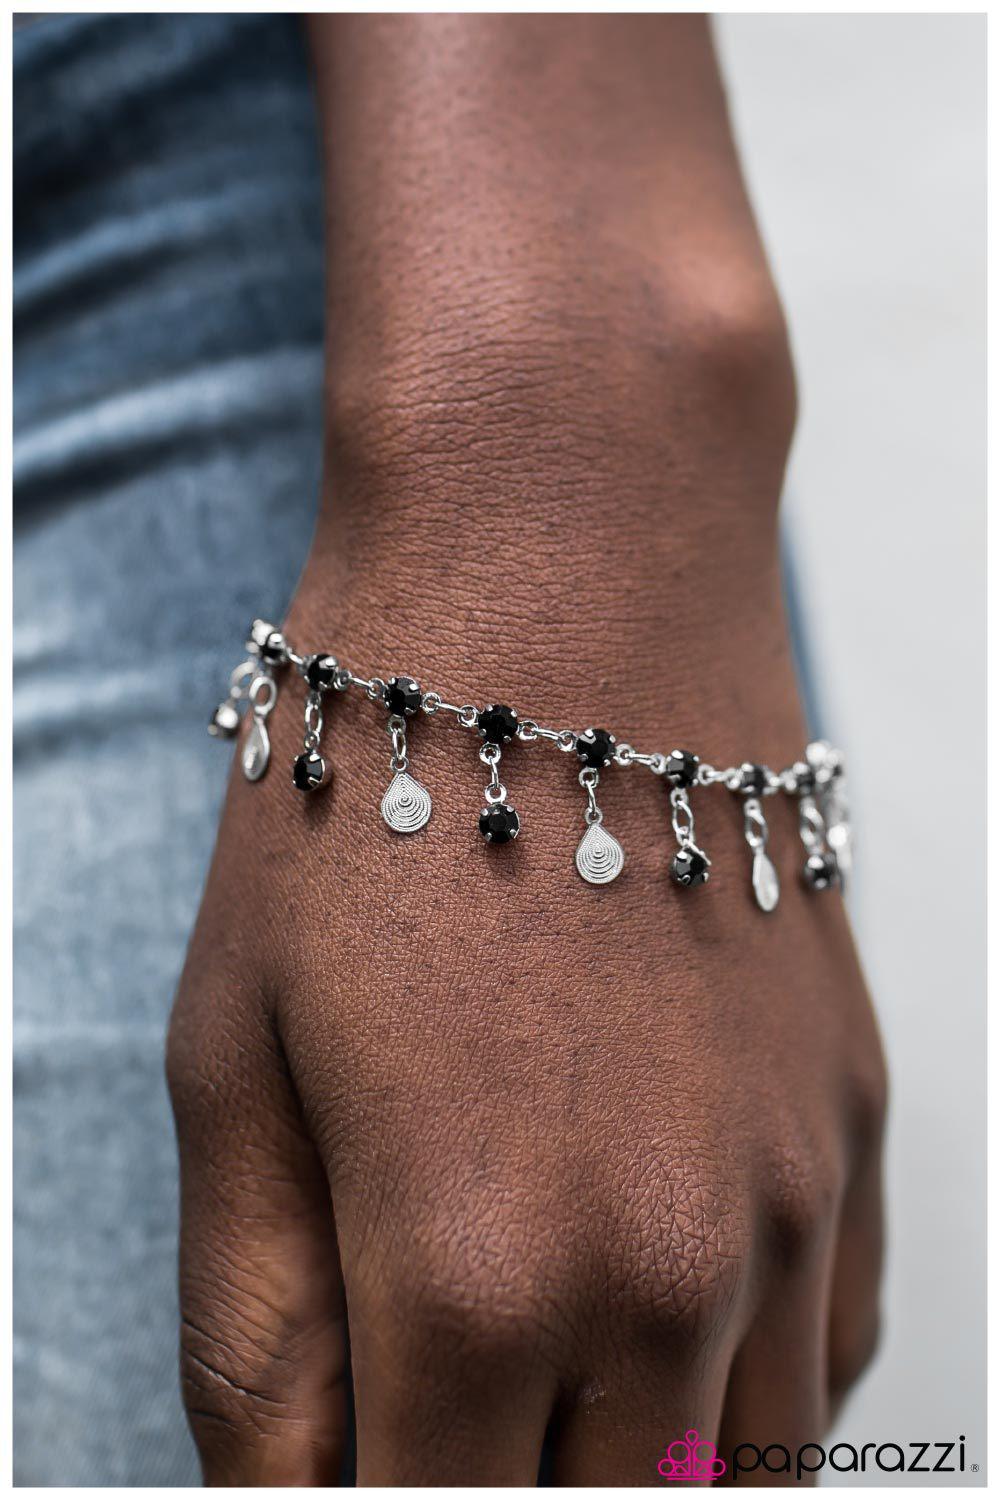 Rain Rain Go Away Silver and Black Teardrop Charm Bracelet - Paparazzi Accessories-CarasShop.com - $5 Jewelry by Cara Jewels